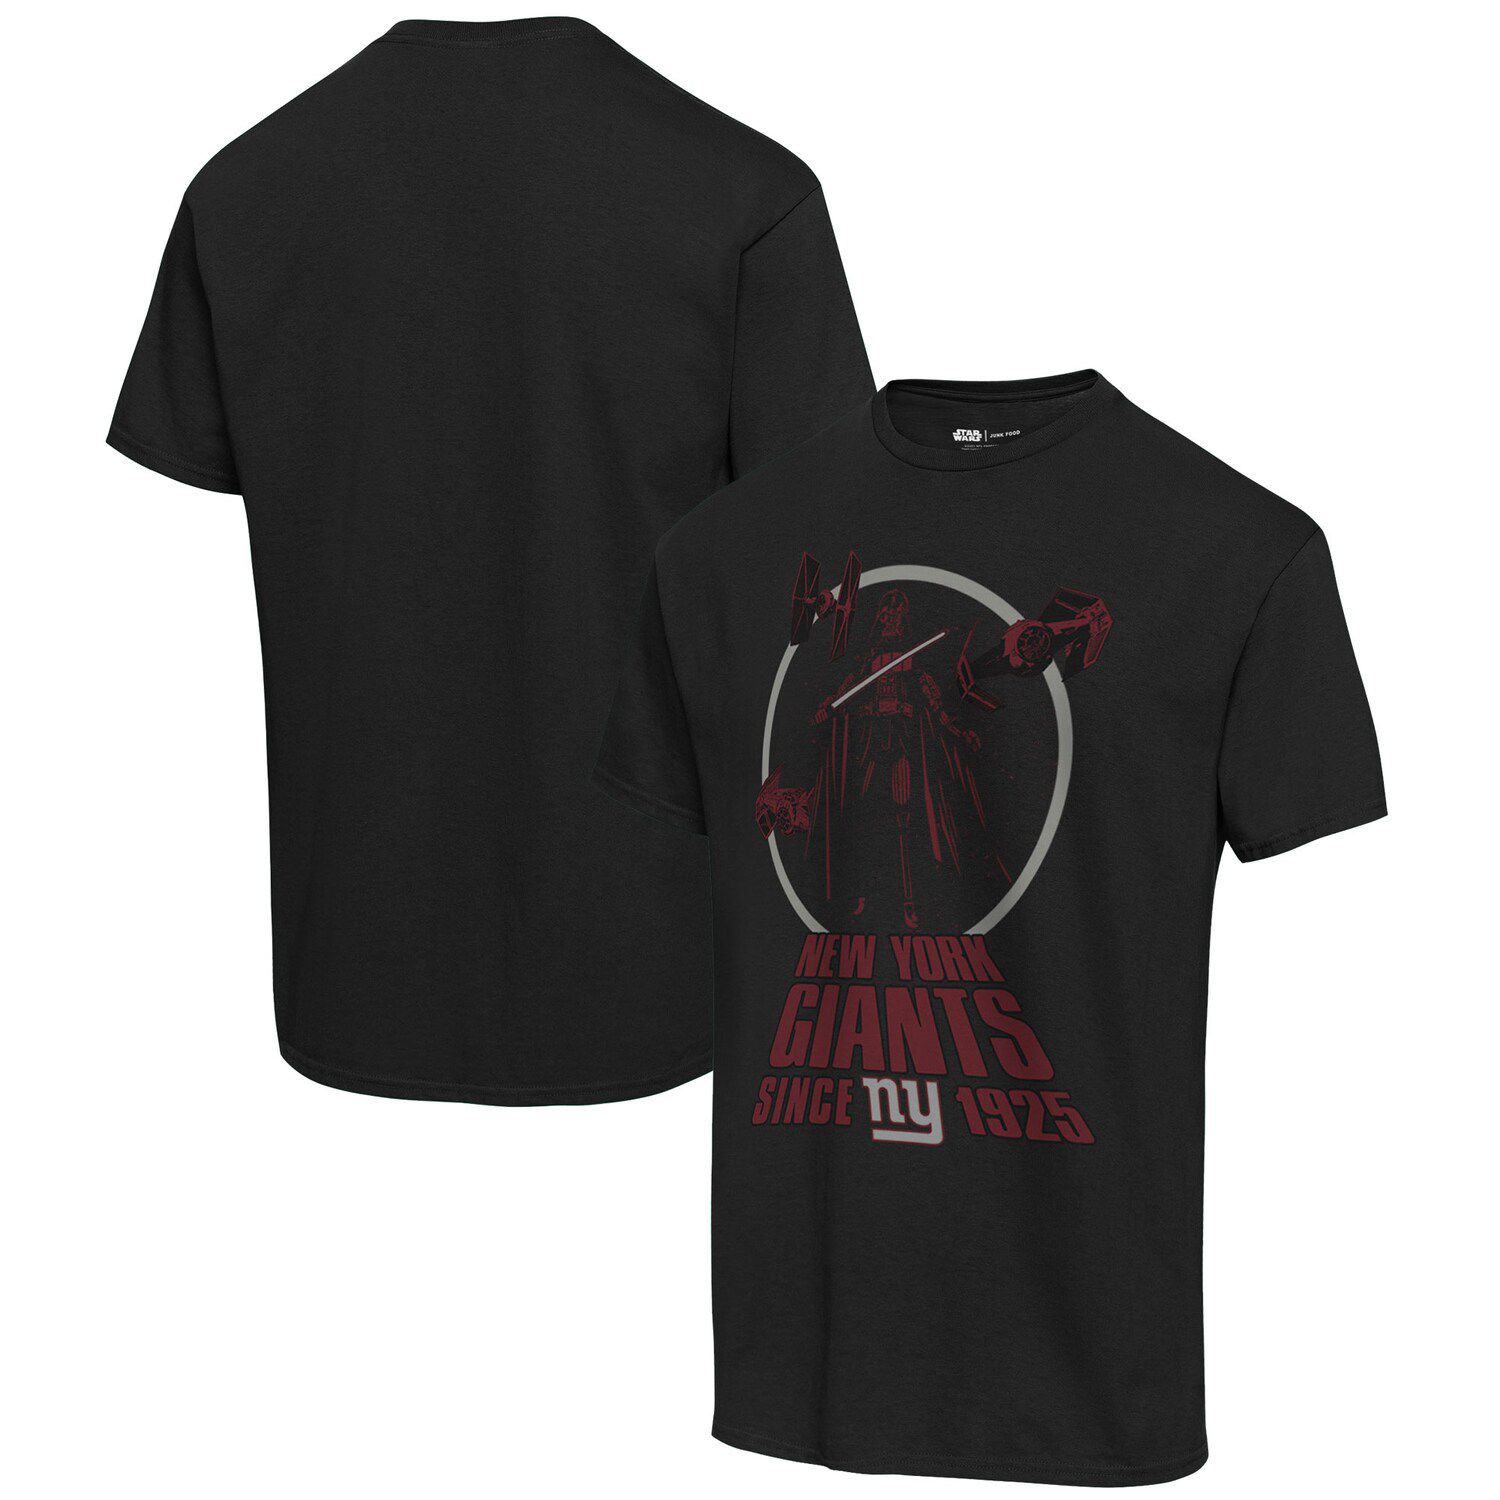 Image for Unbranded Men's Junk Food Black New York Giants Disney Star Wars Empire Title Crawl T-Shirt at Kohl's.